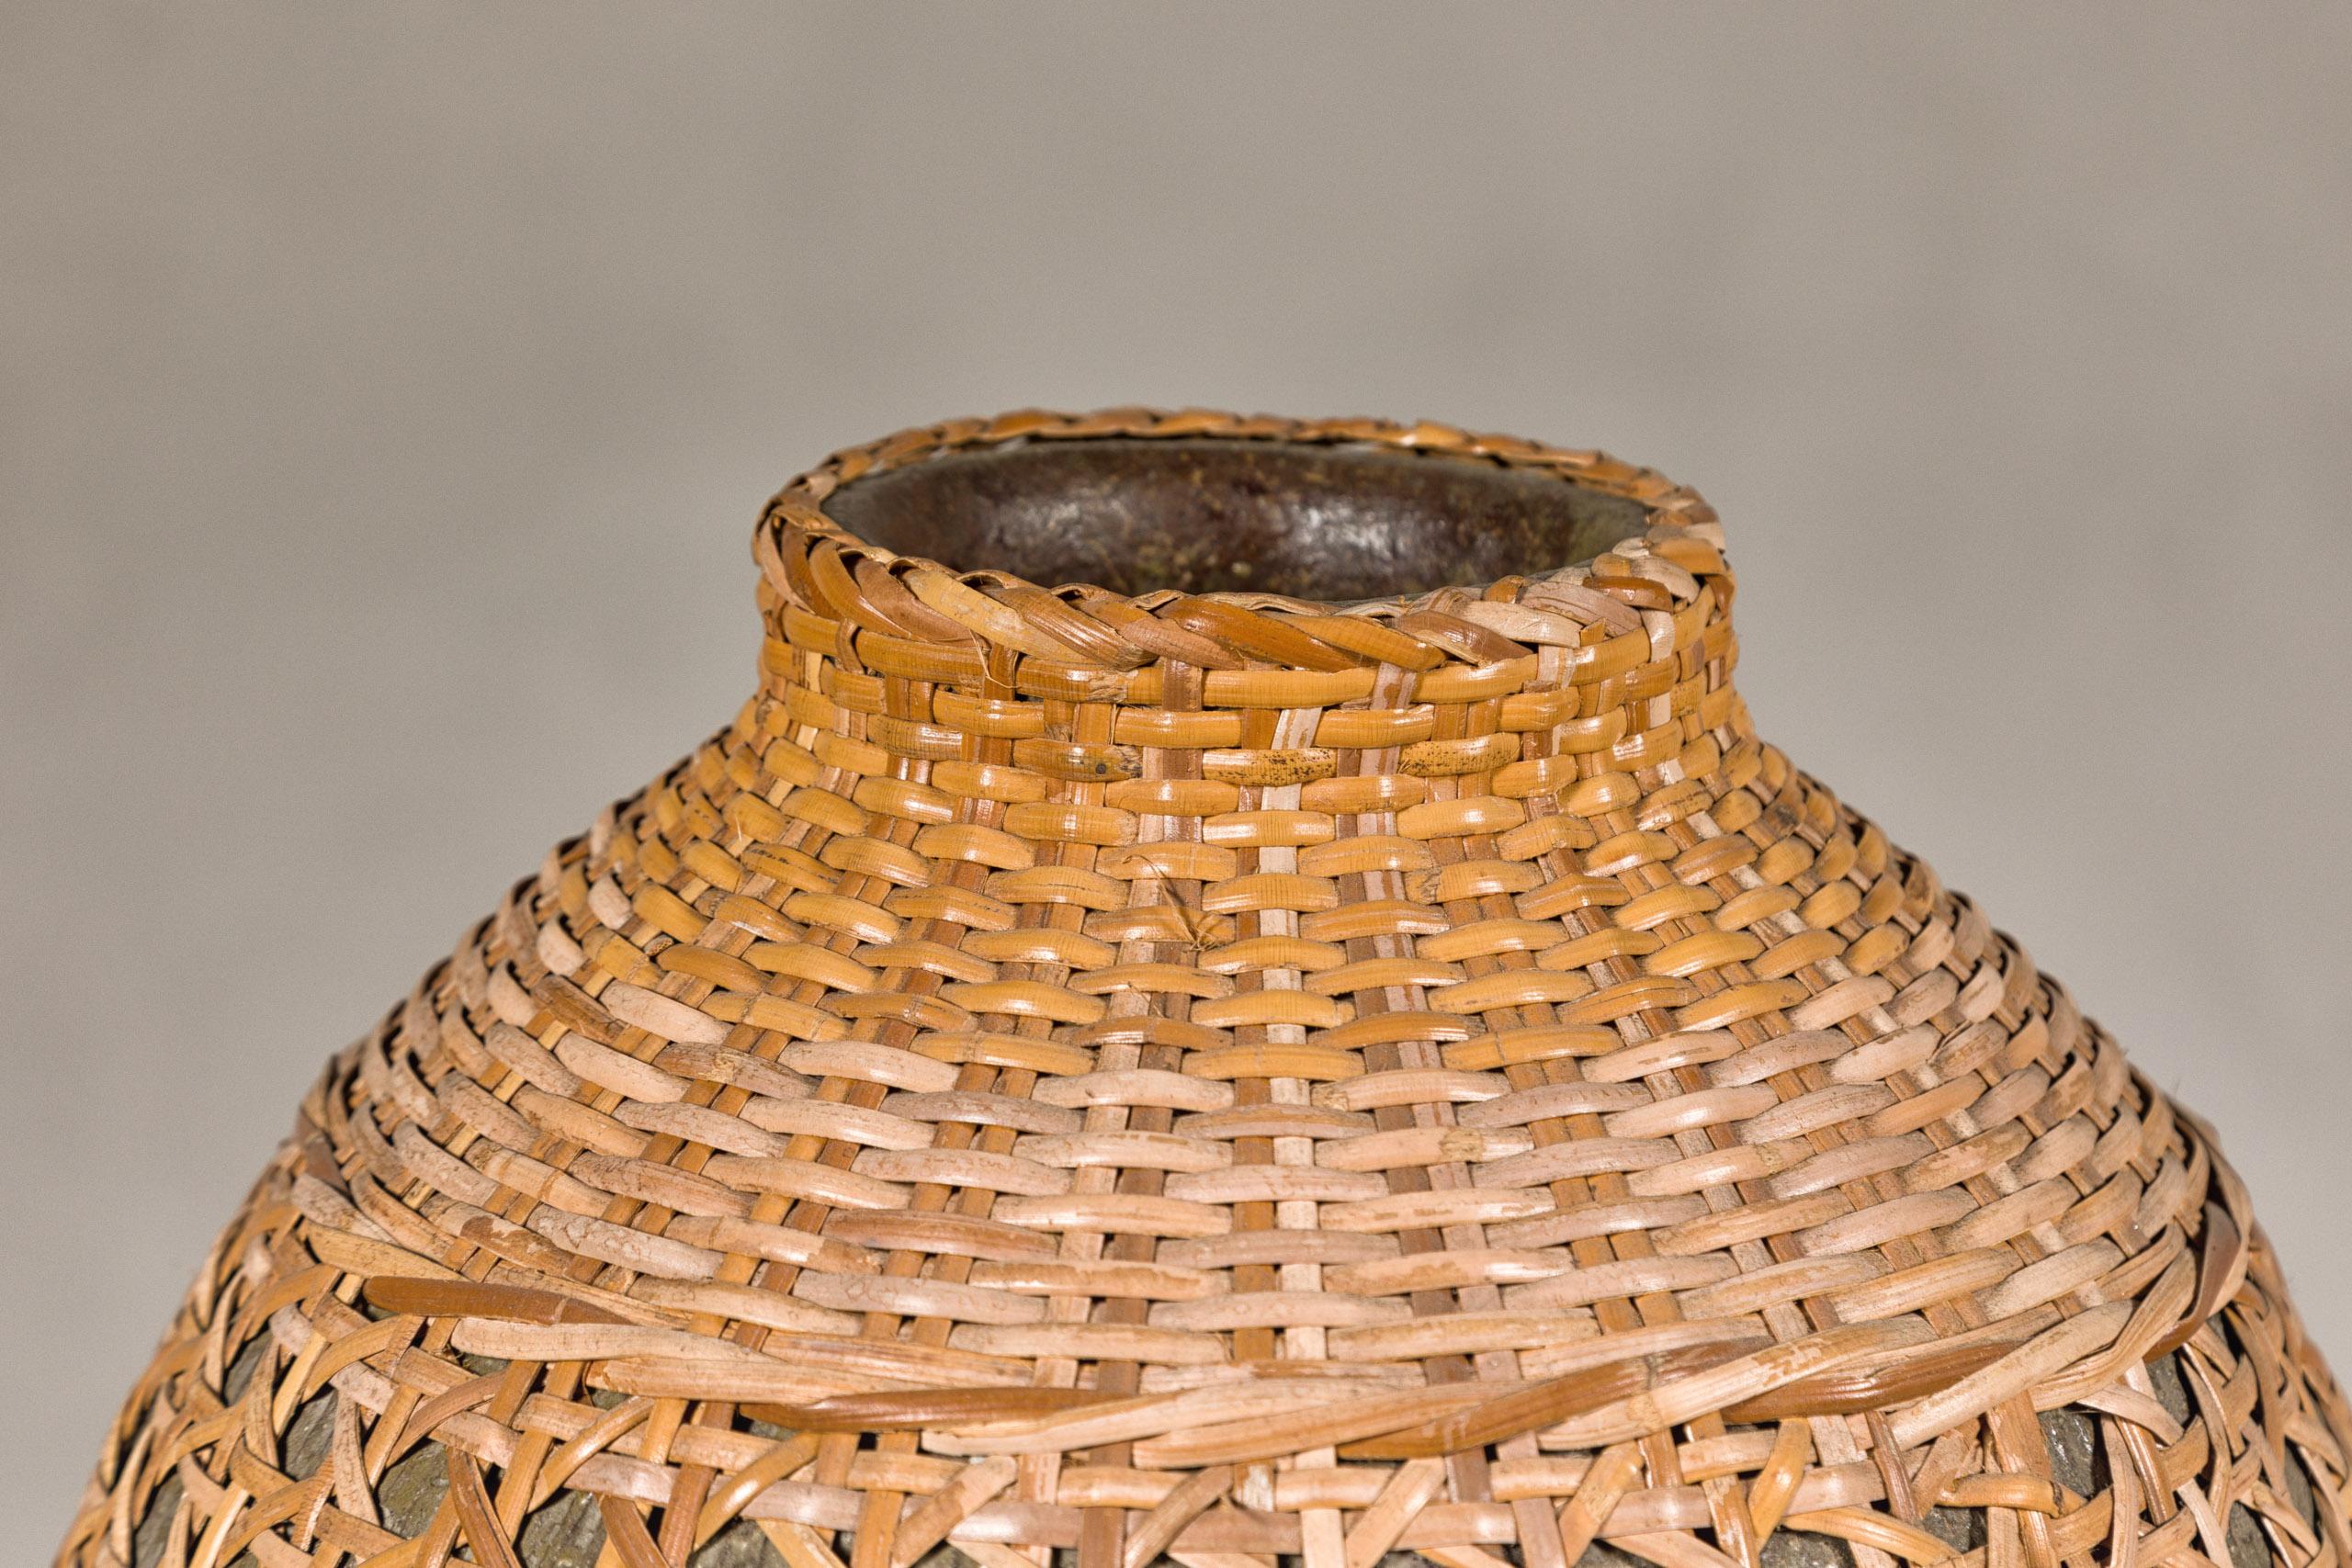 20th Century Rustic Pair of Midcentury Wicker Vases Made of Cane over Ceramic